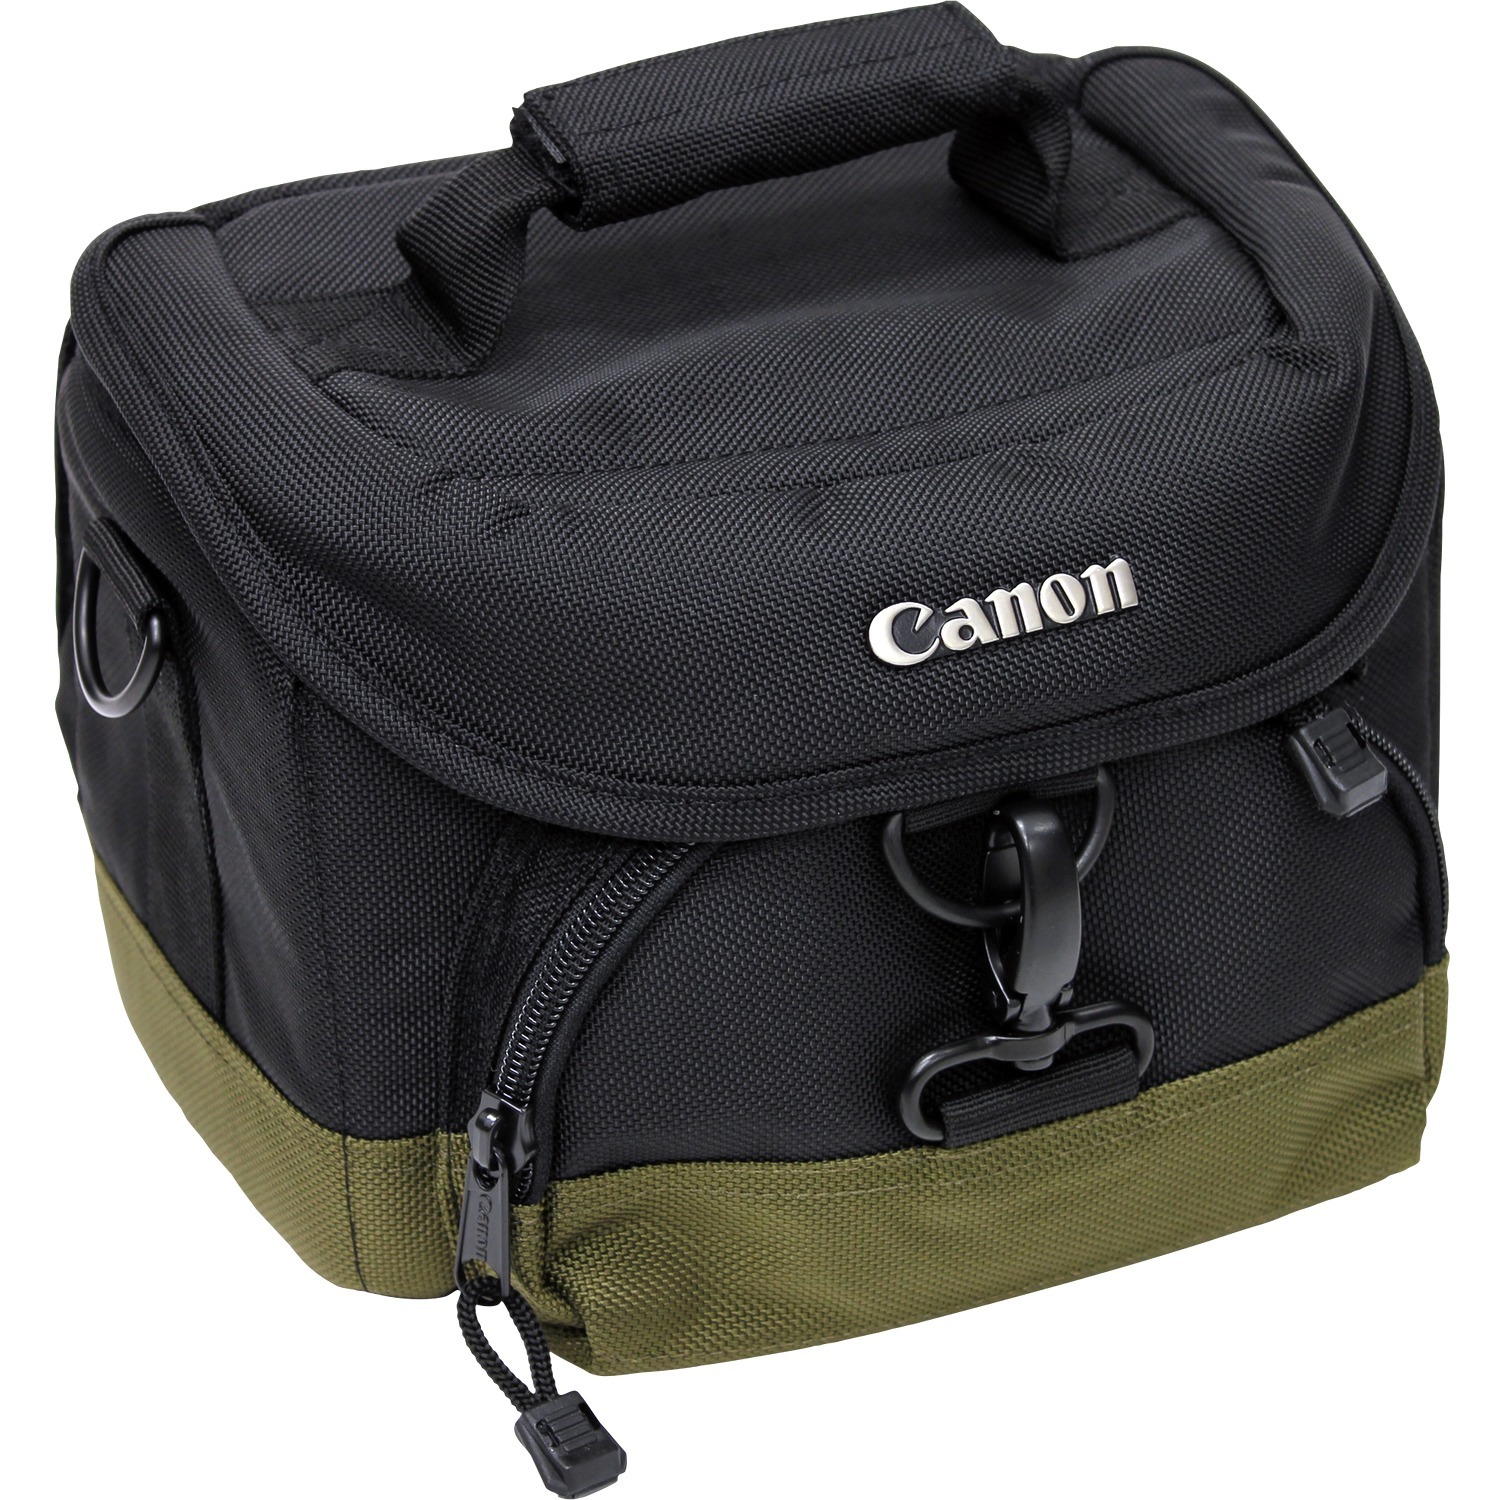 Custom Gadget Bag 100eg - image 1 of 2